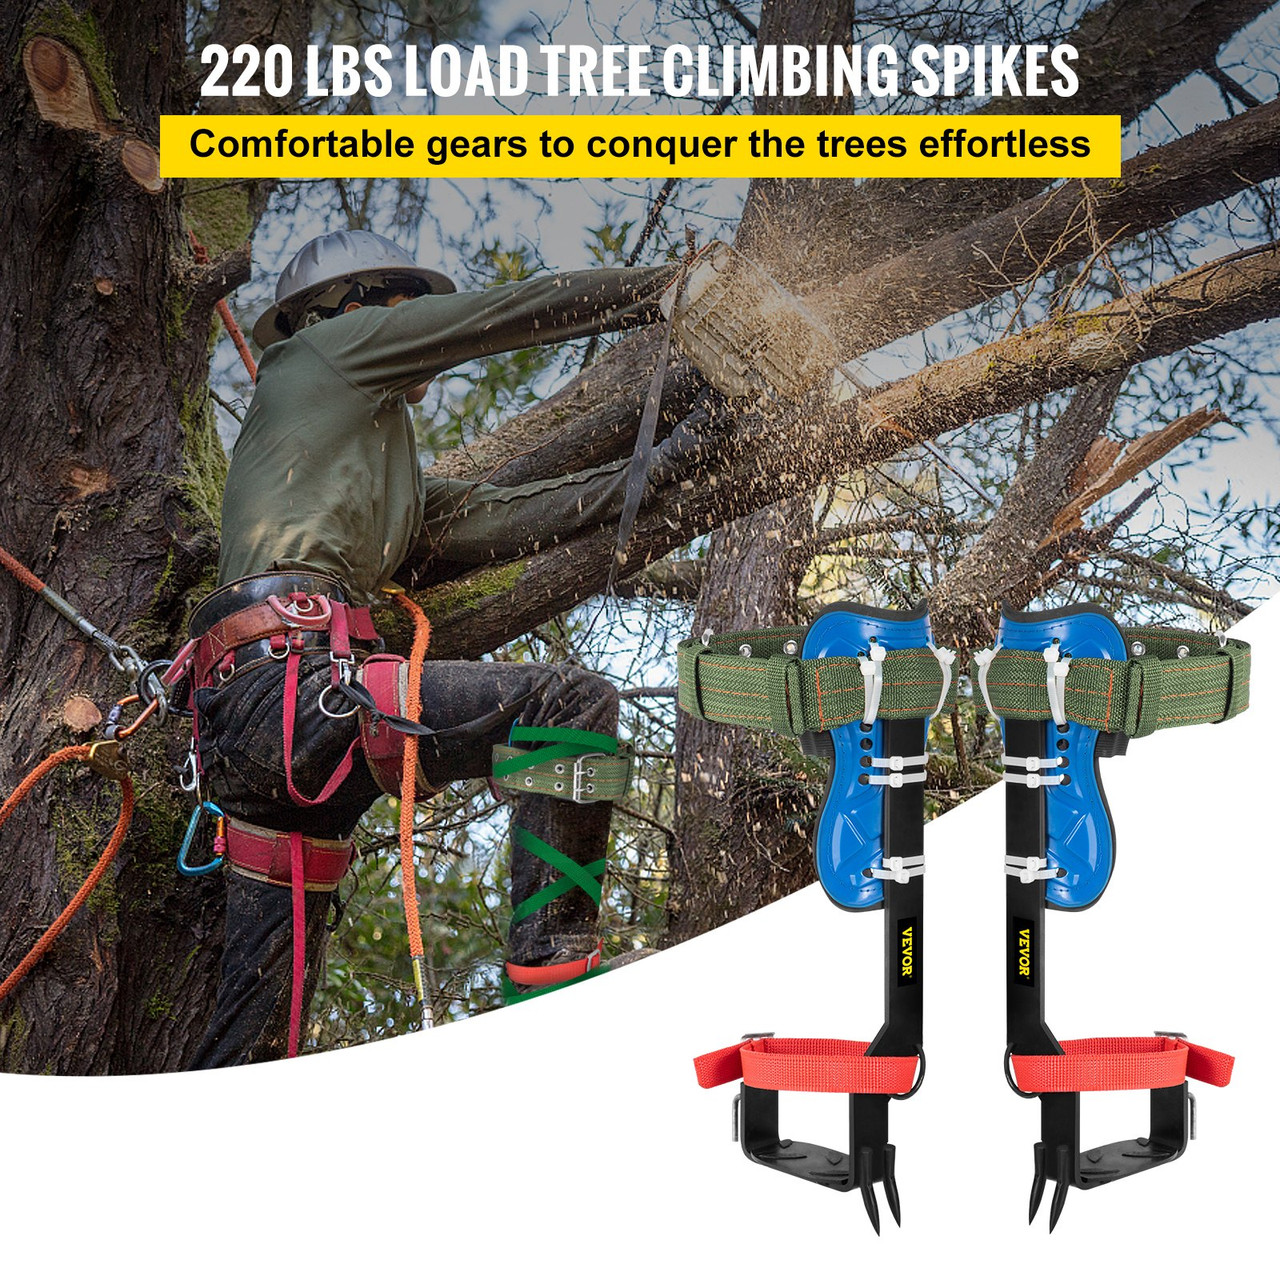 Tree Climbing Spikes, 4 in 1 Alloy Metal Adjustable Pole Climbing